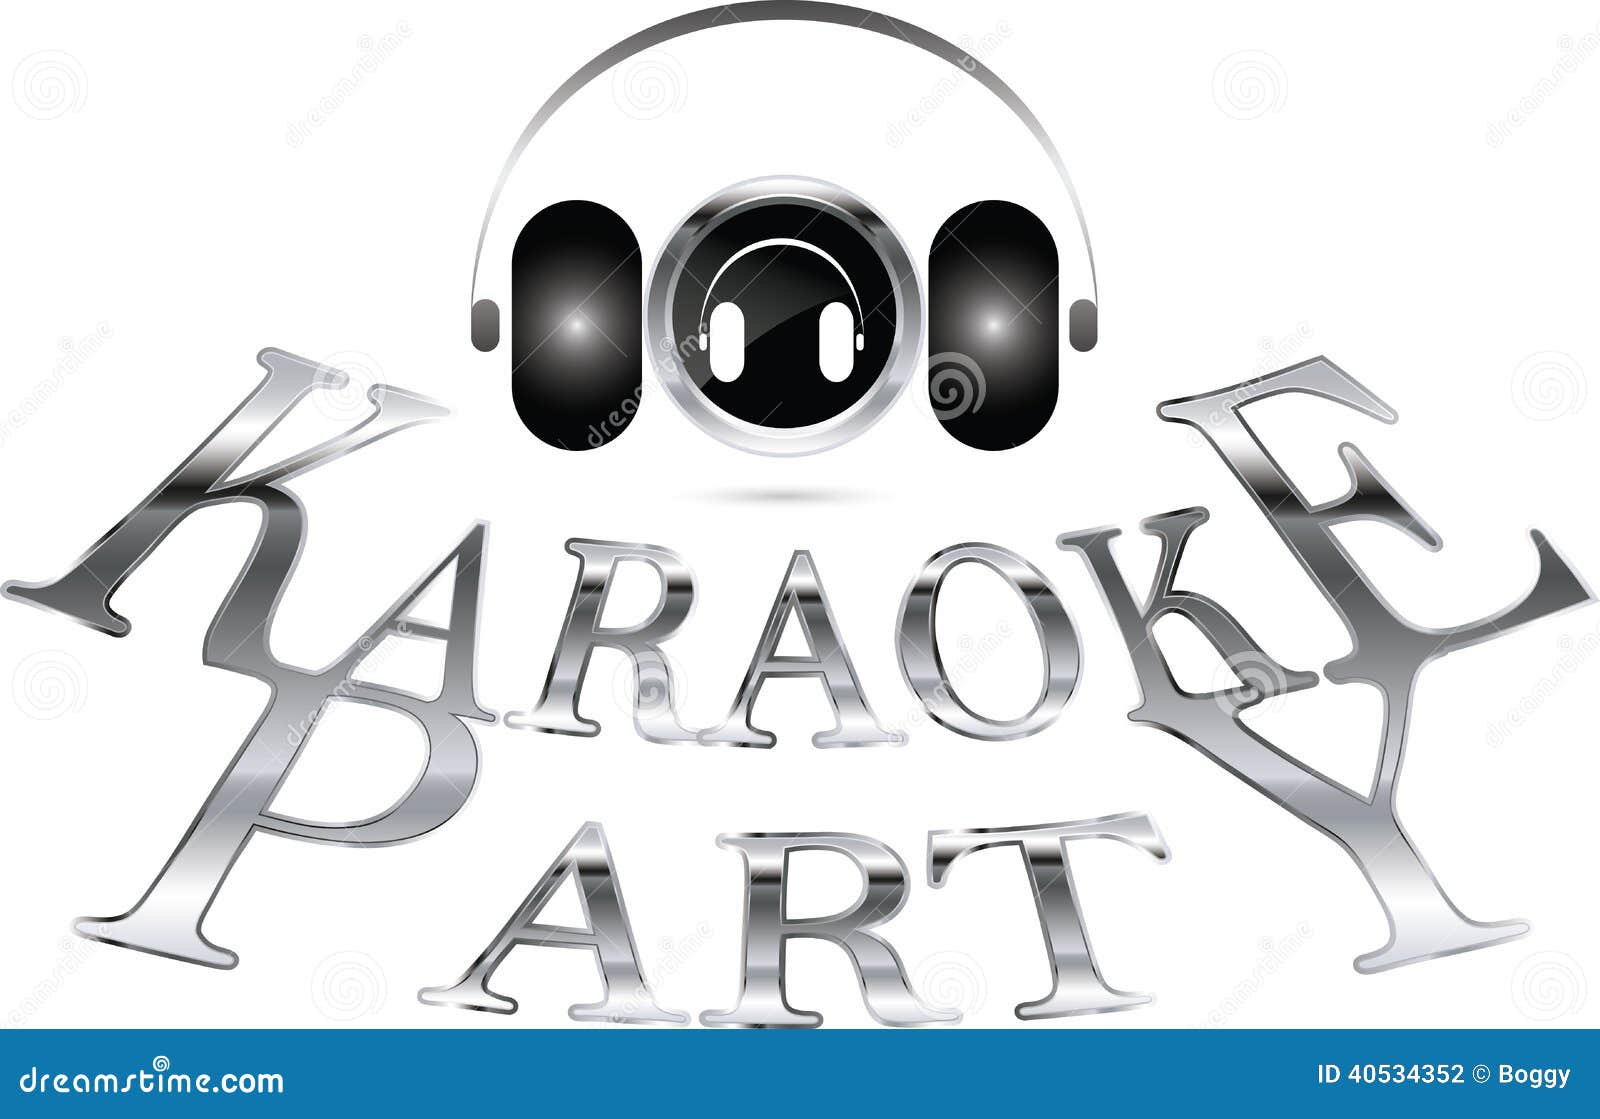 karaoke clip art free download - photo #22